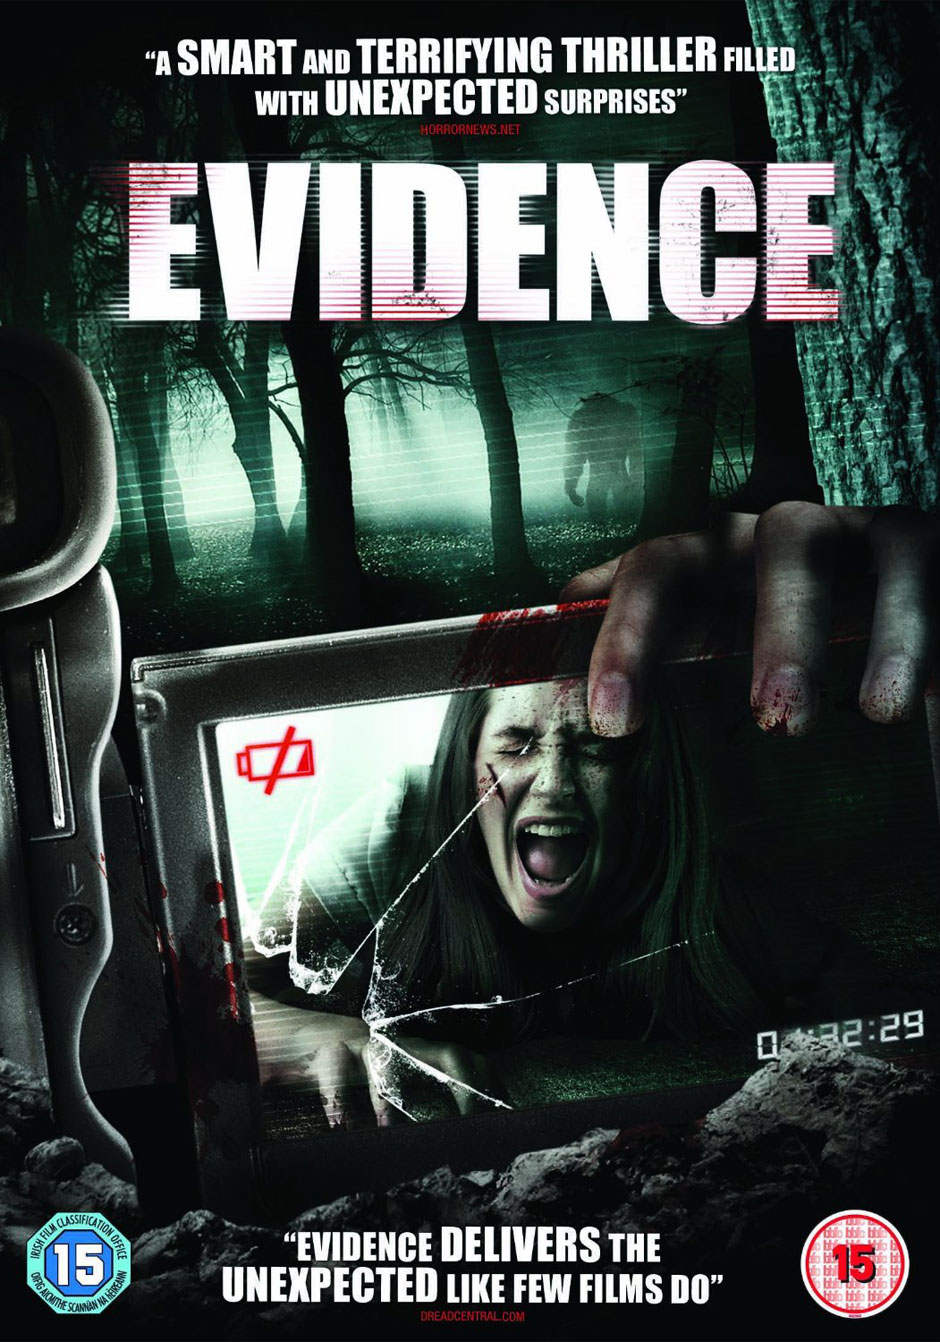 The Evidence movie